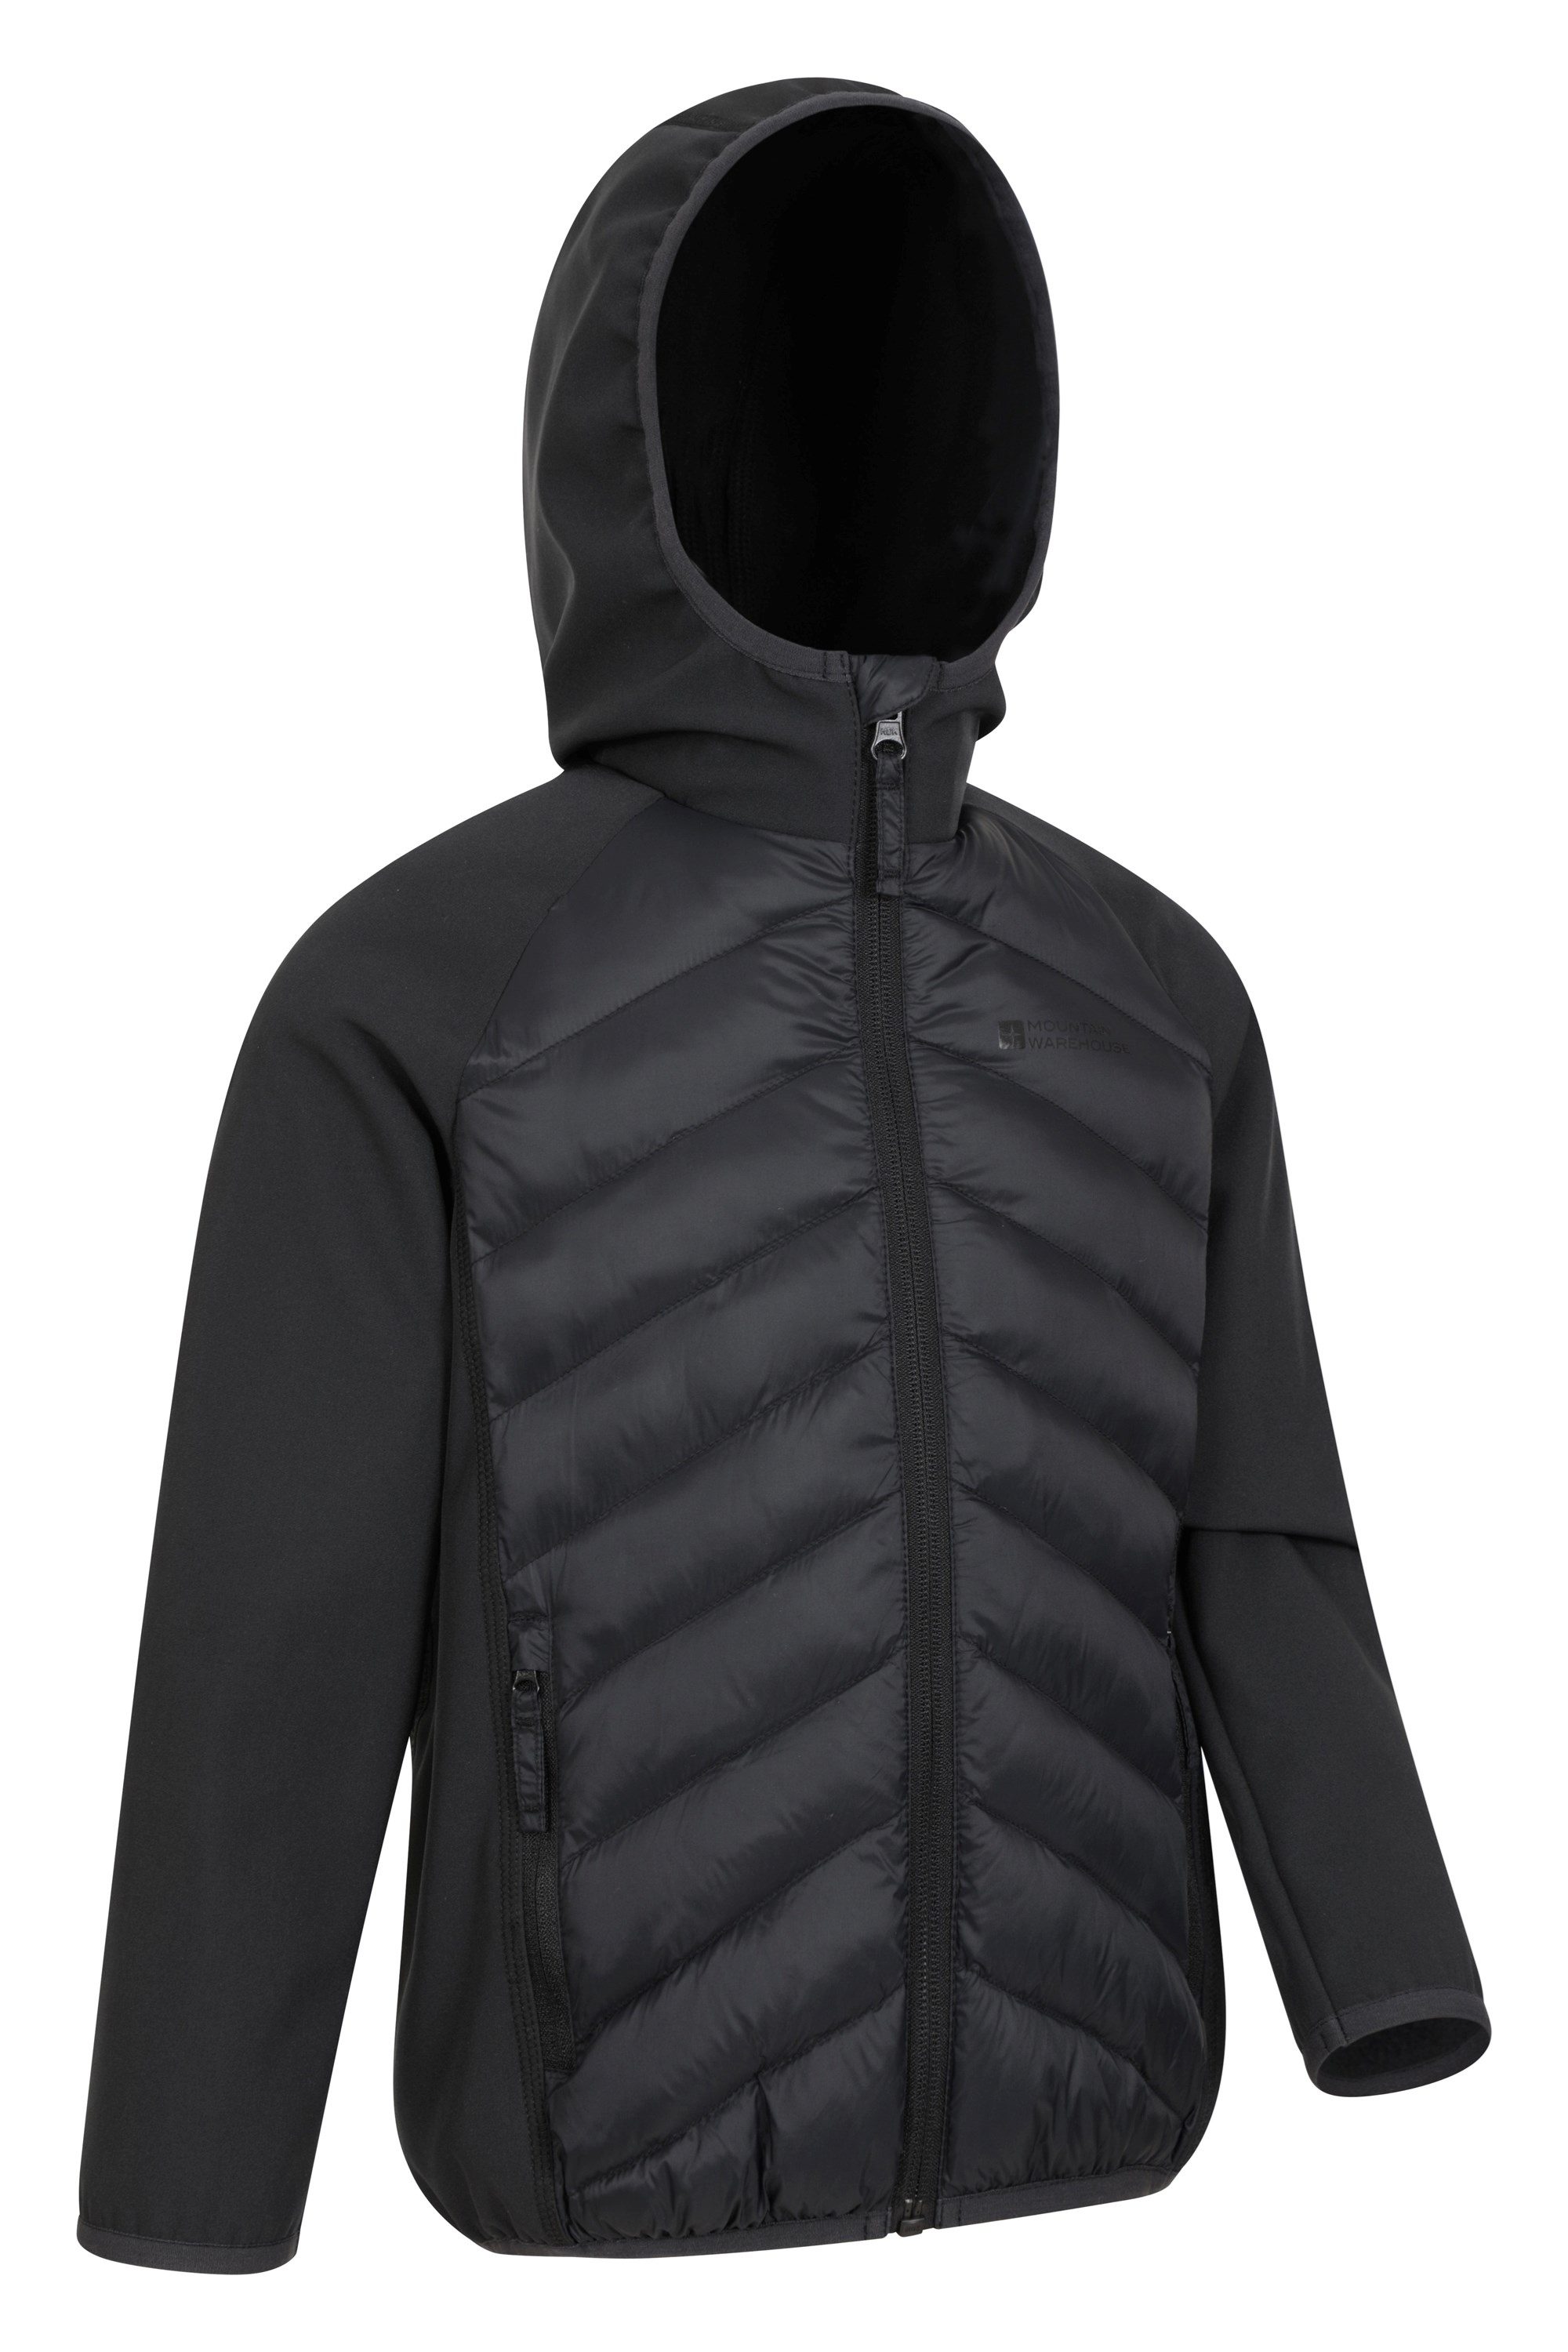 Mountain Warehouse Boy's size 13 years old black and grey Mountain Warehouse jacket raincoat 